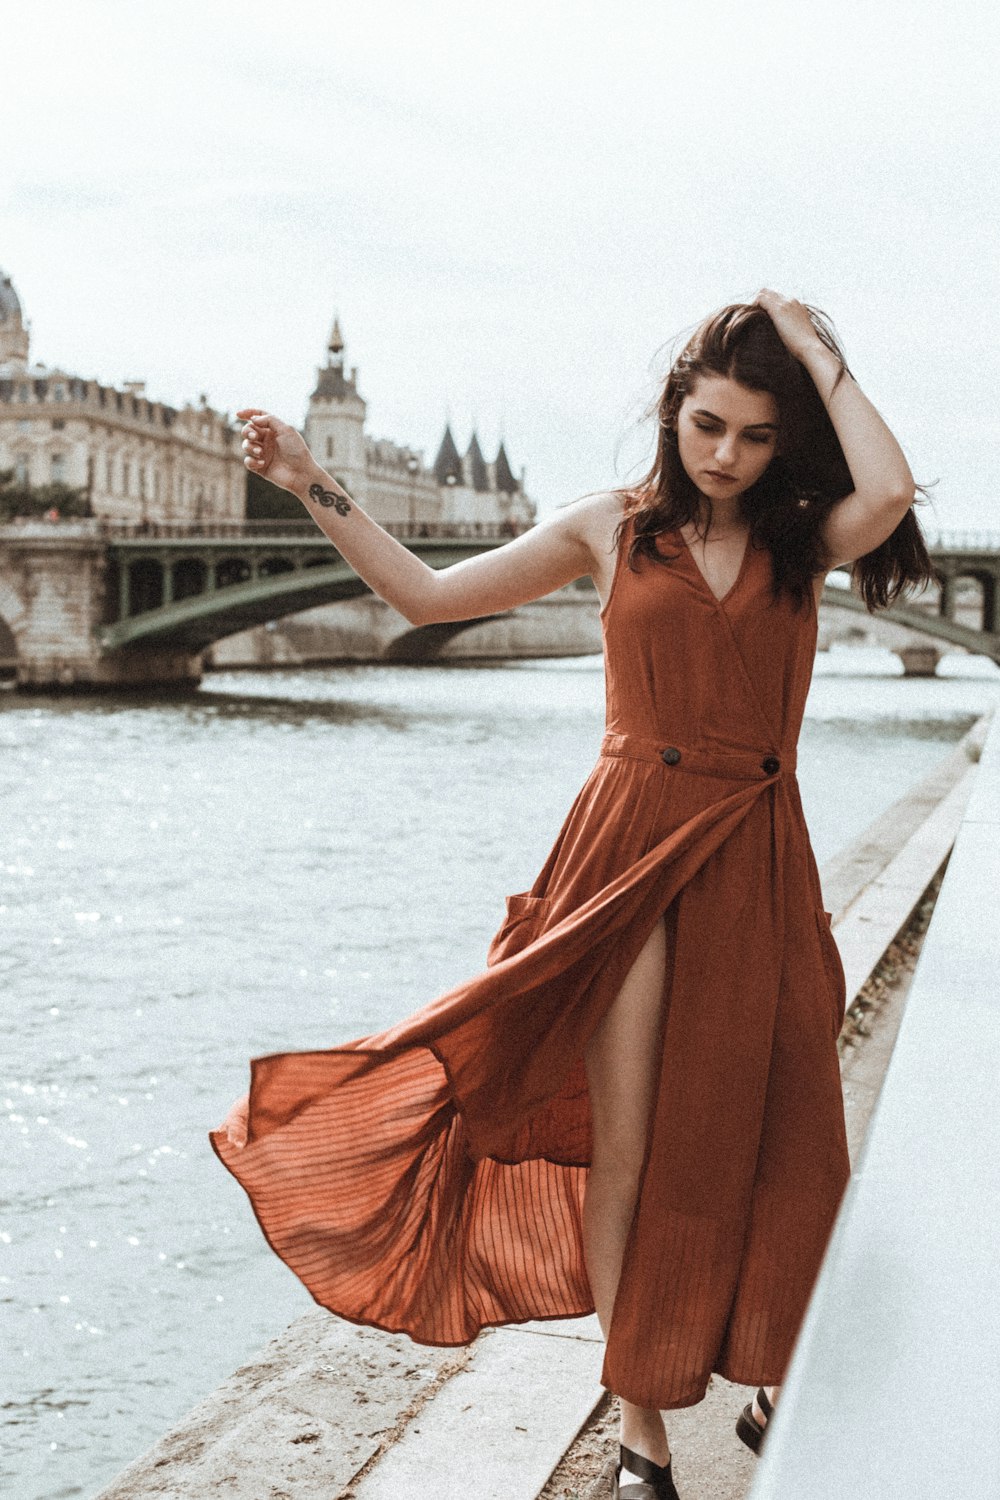 Frau in rotem ärmellosem Kleid steht tagsüber auf der Brücke